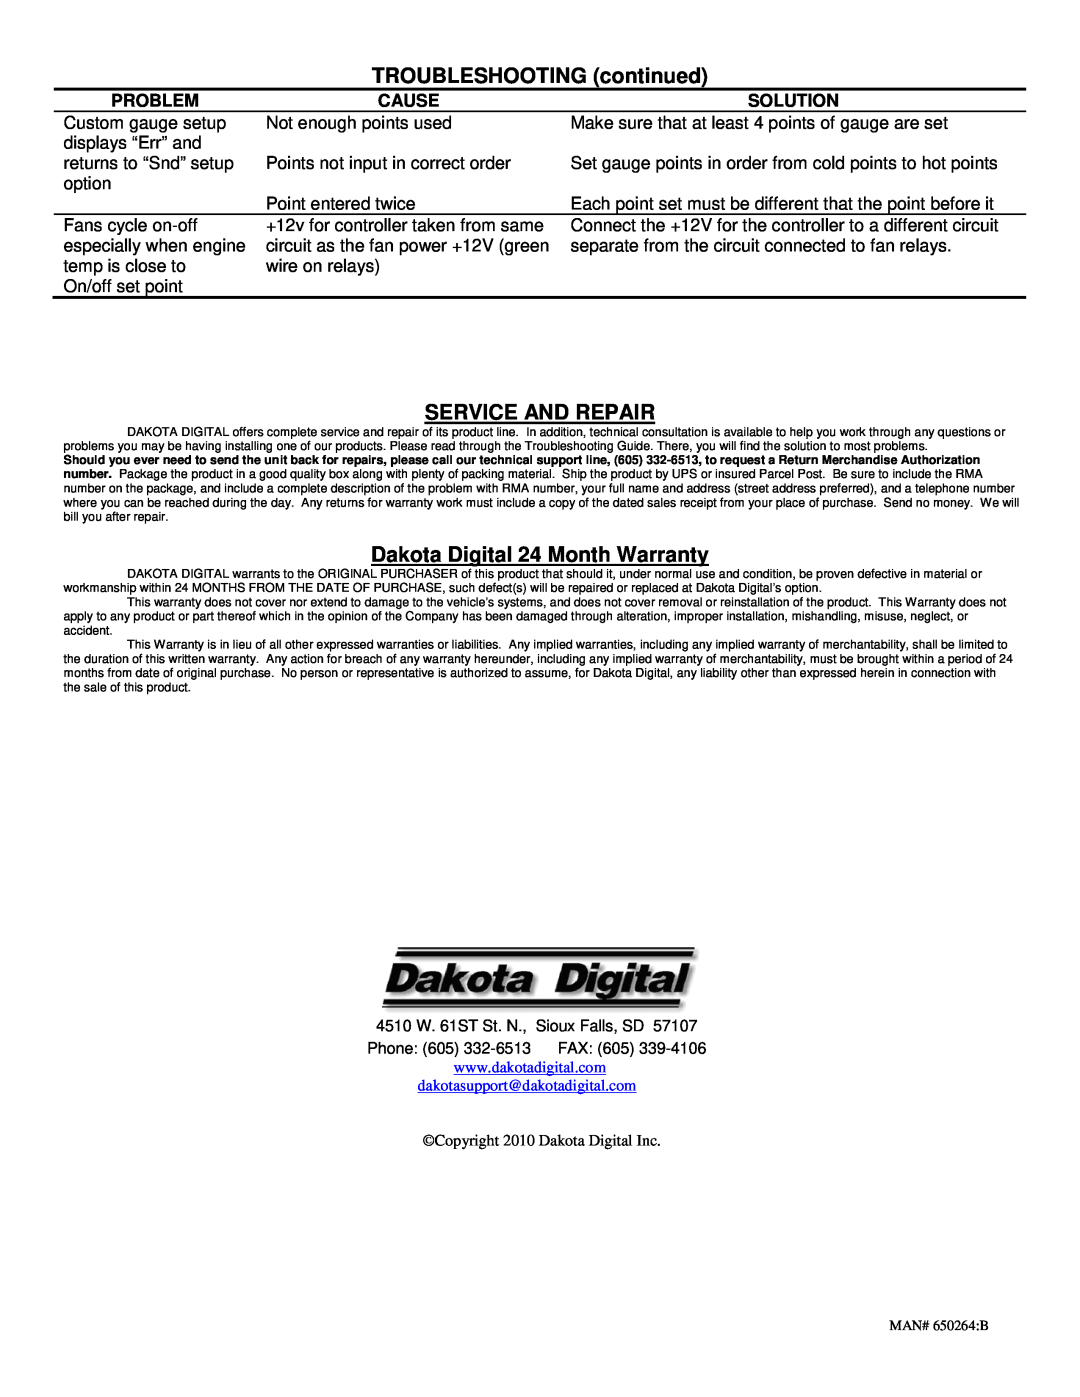 Dakota Digital PAC-2700 TROUBLESHOOTING continued, Service And Repair, Dakota Digital 24 Month Warranty, Problem, Cause 